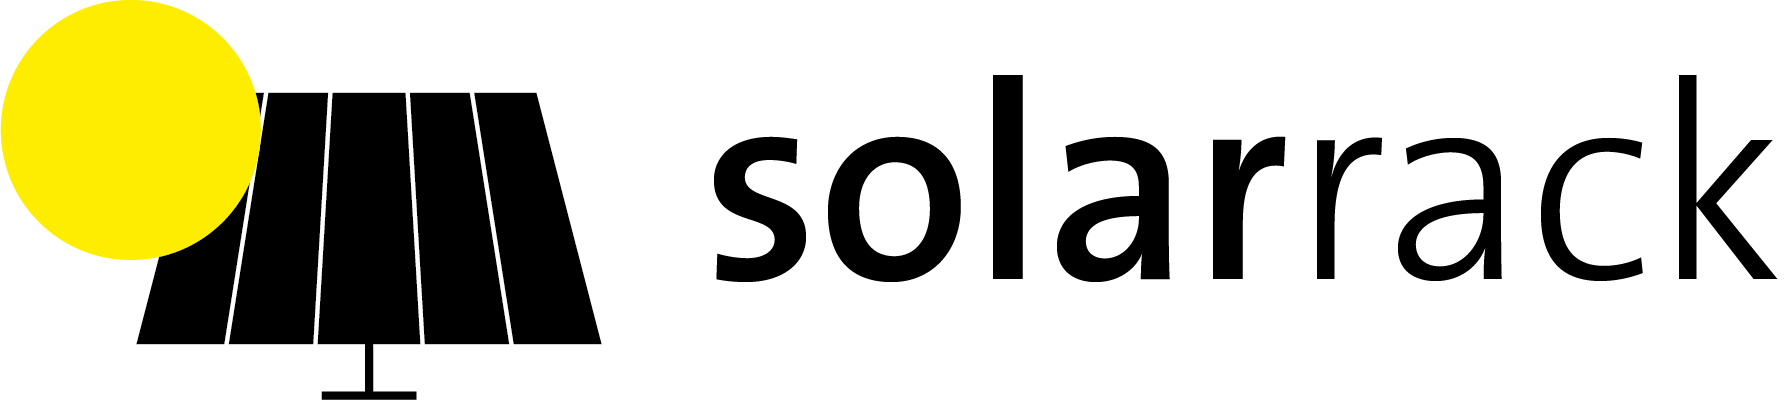 Solarrack Logo horizontal